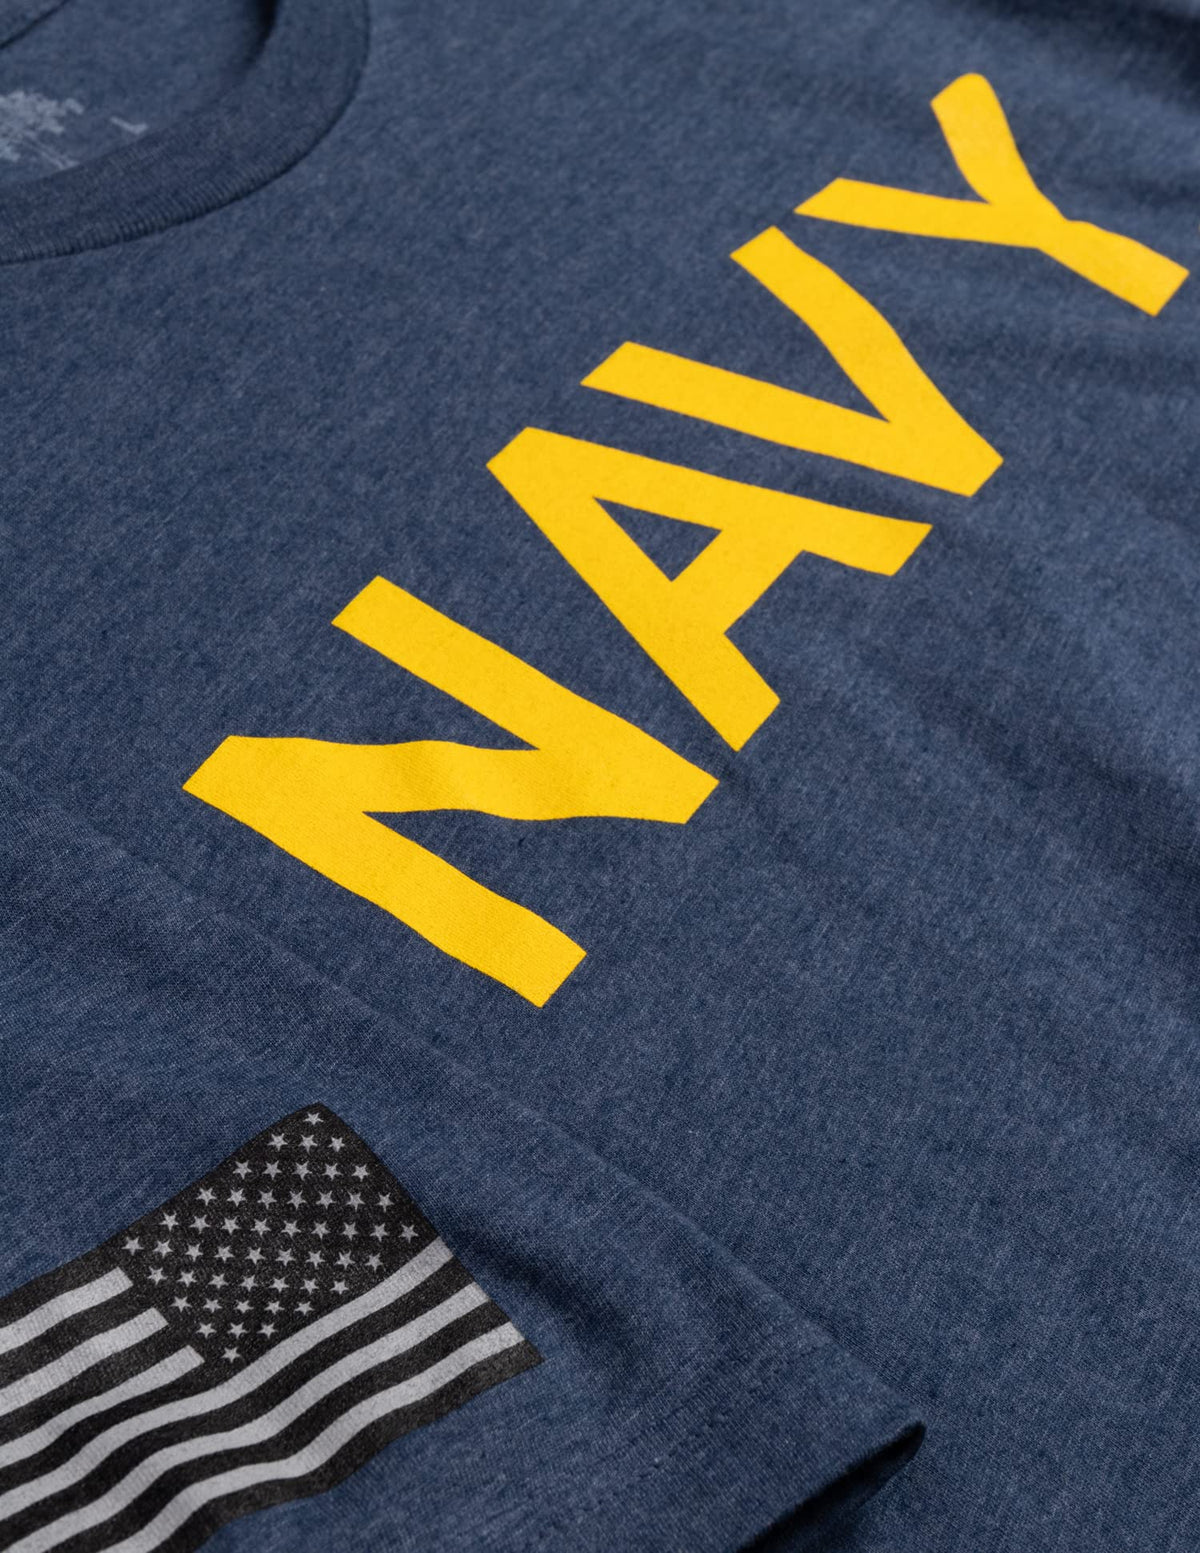 USS Antietam, CG-54 | U.S. Navy Sailor Veteran USN United States Naval T-shirt for Men Women